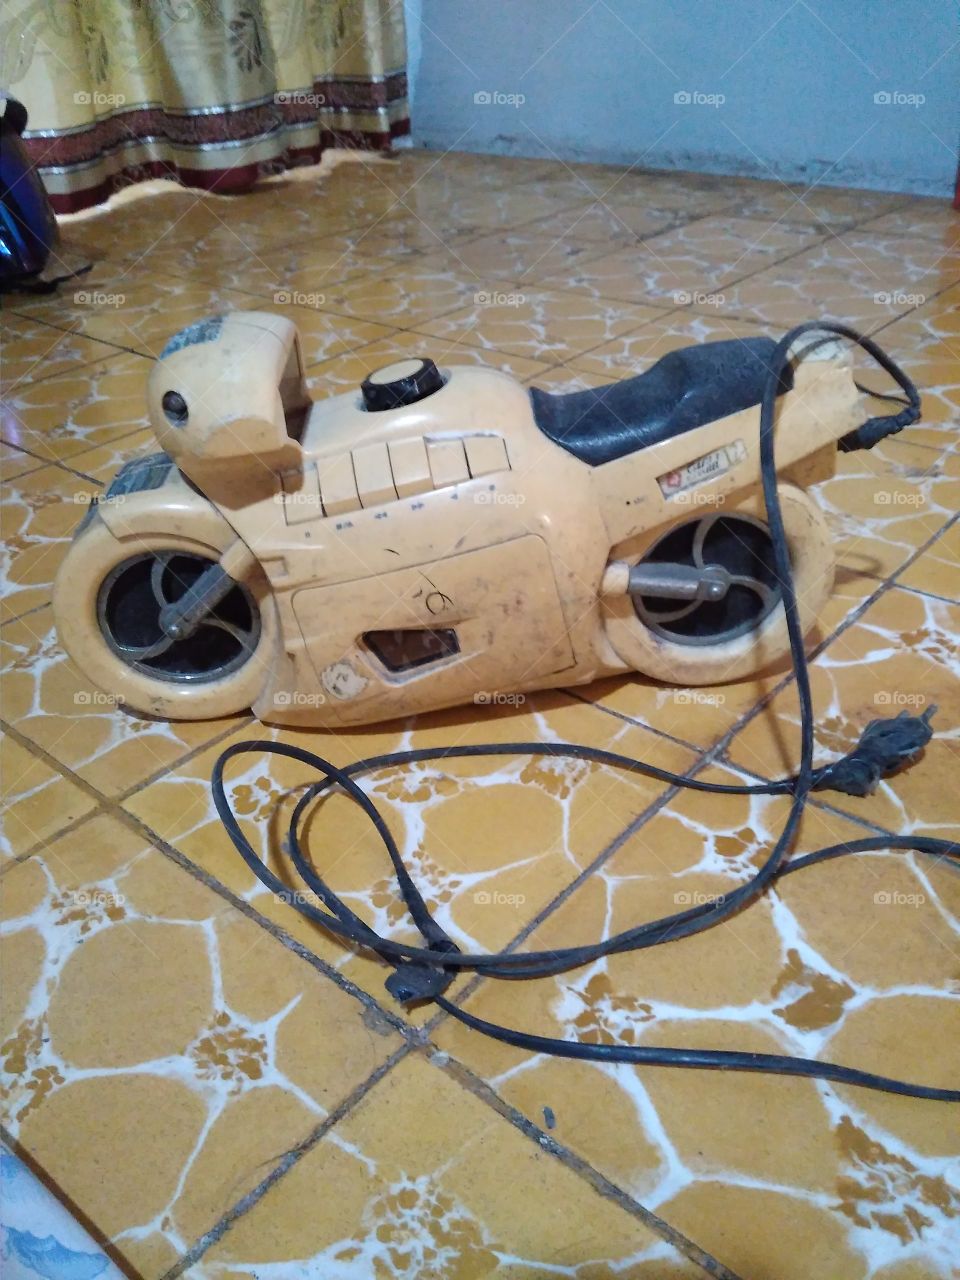 Radio motorbike